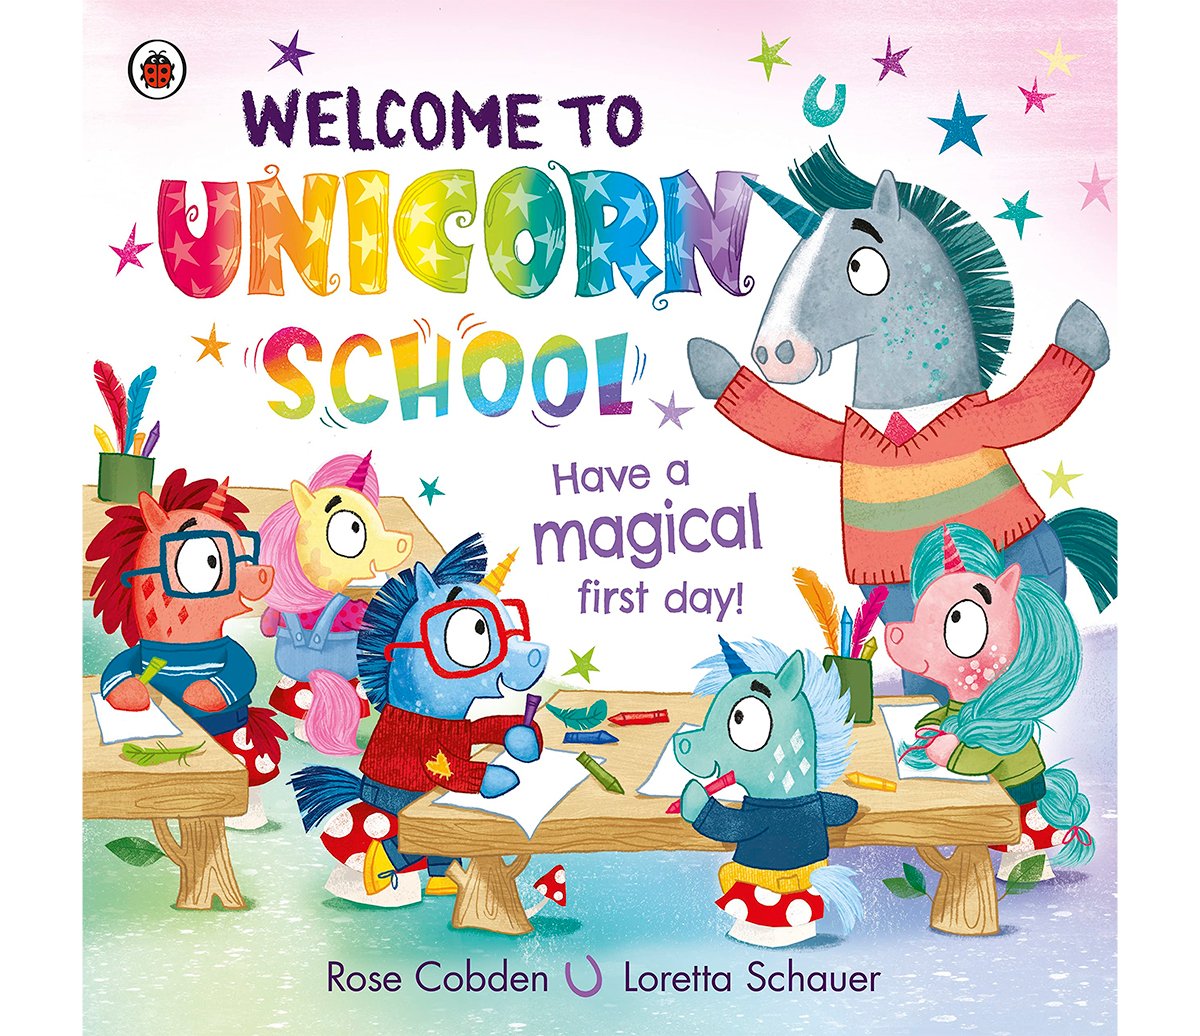 loretta-schauer-unicorn-school-cover.jpg